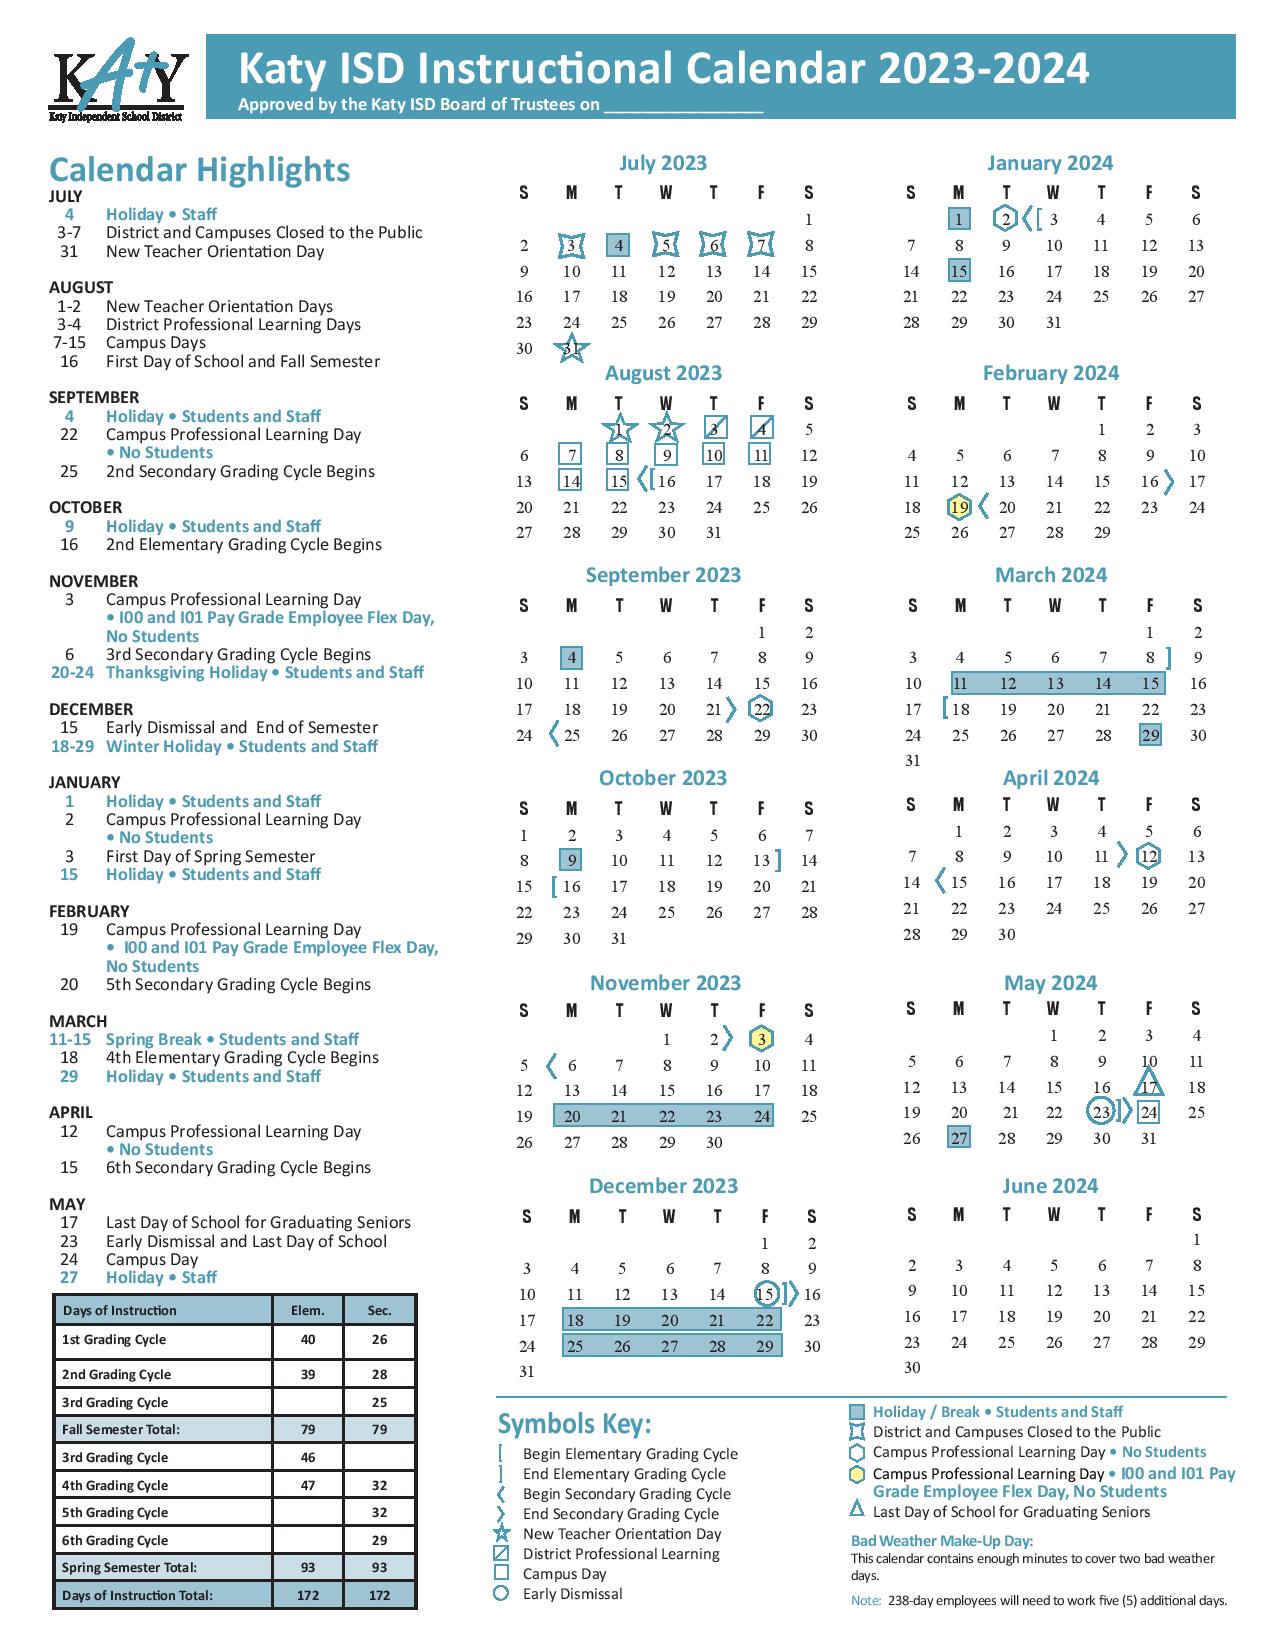 katy-isd-approves-2024-2025-instructional-calendar